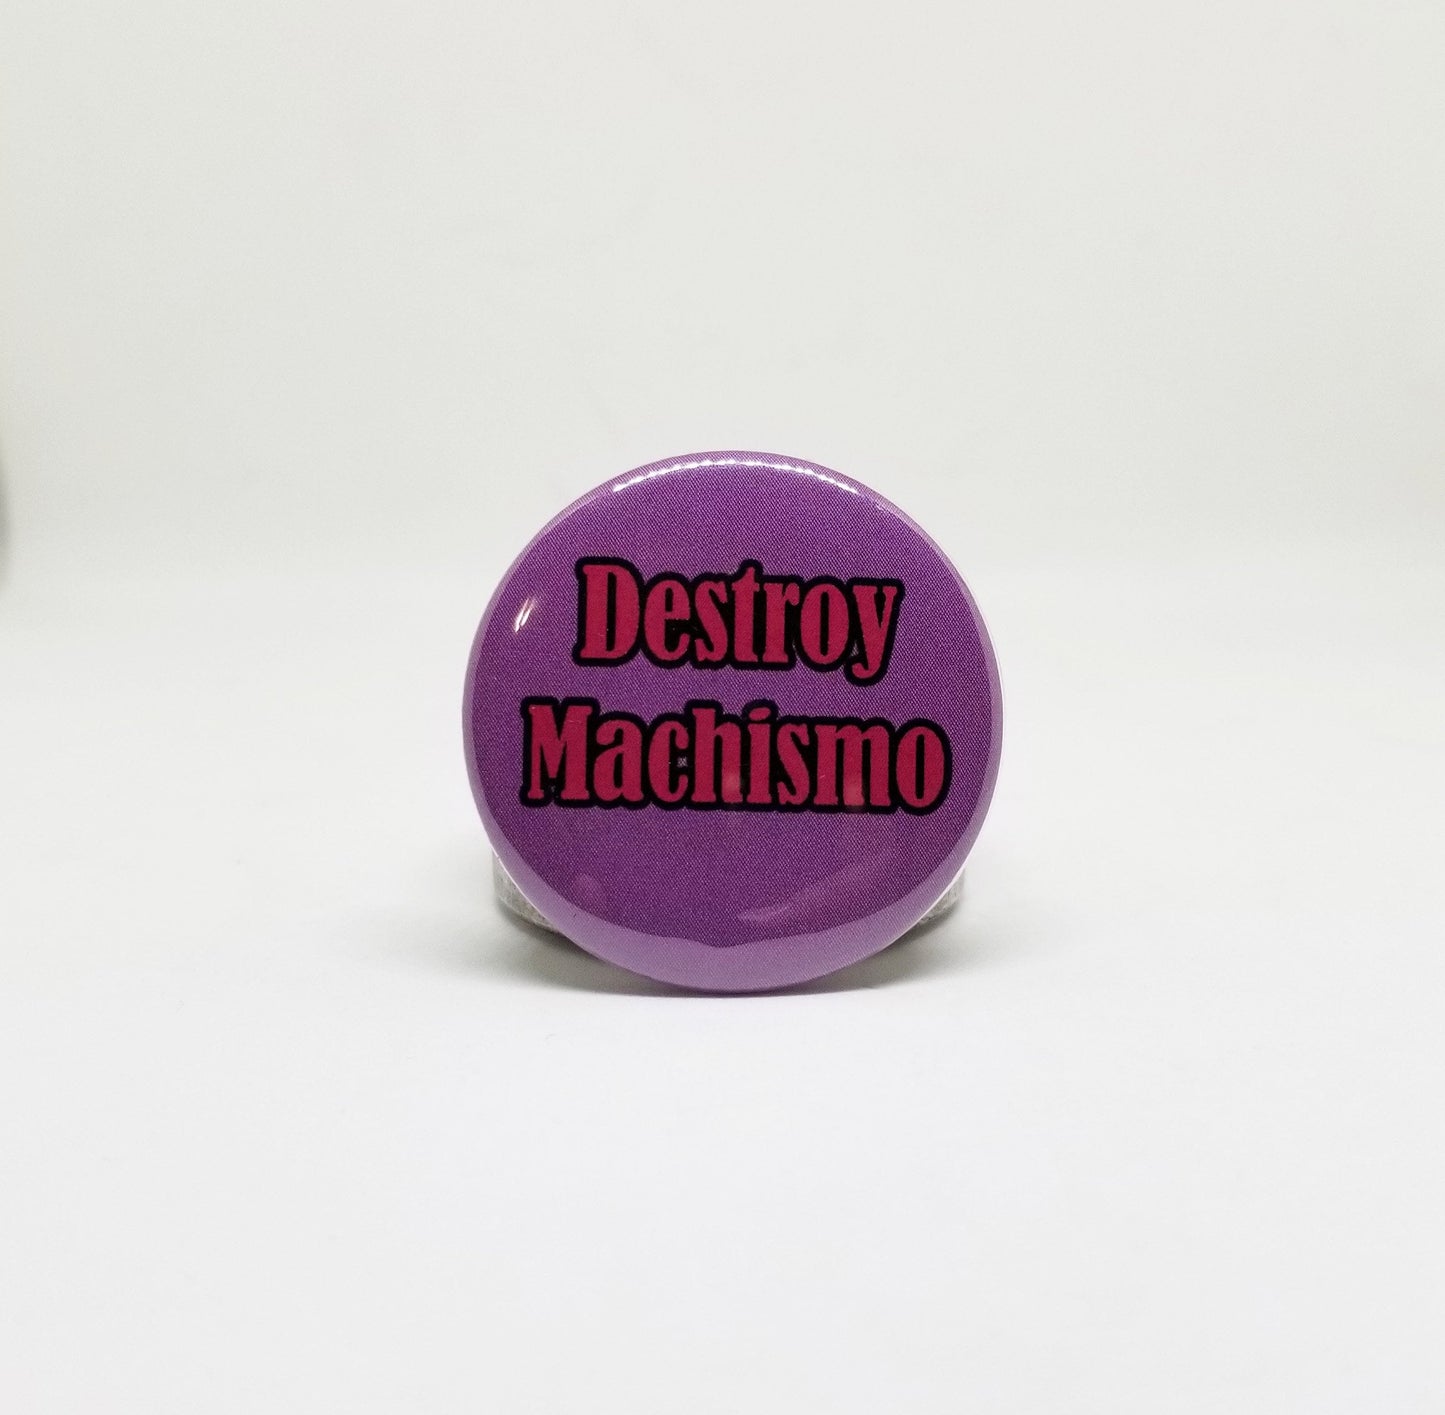 Destroy machismo button pin